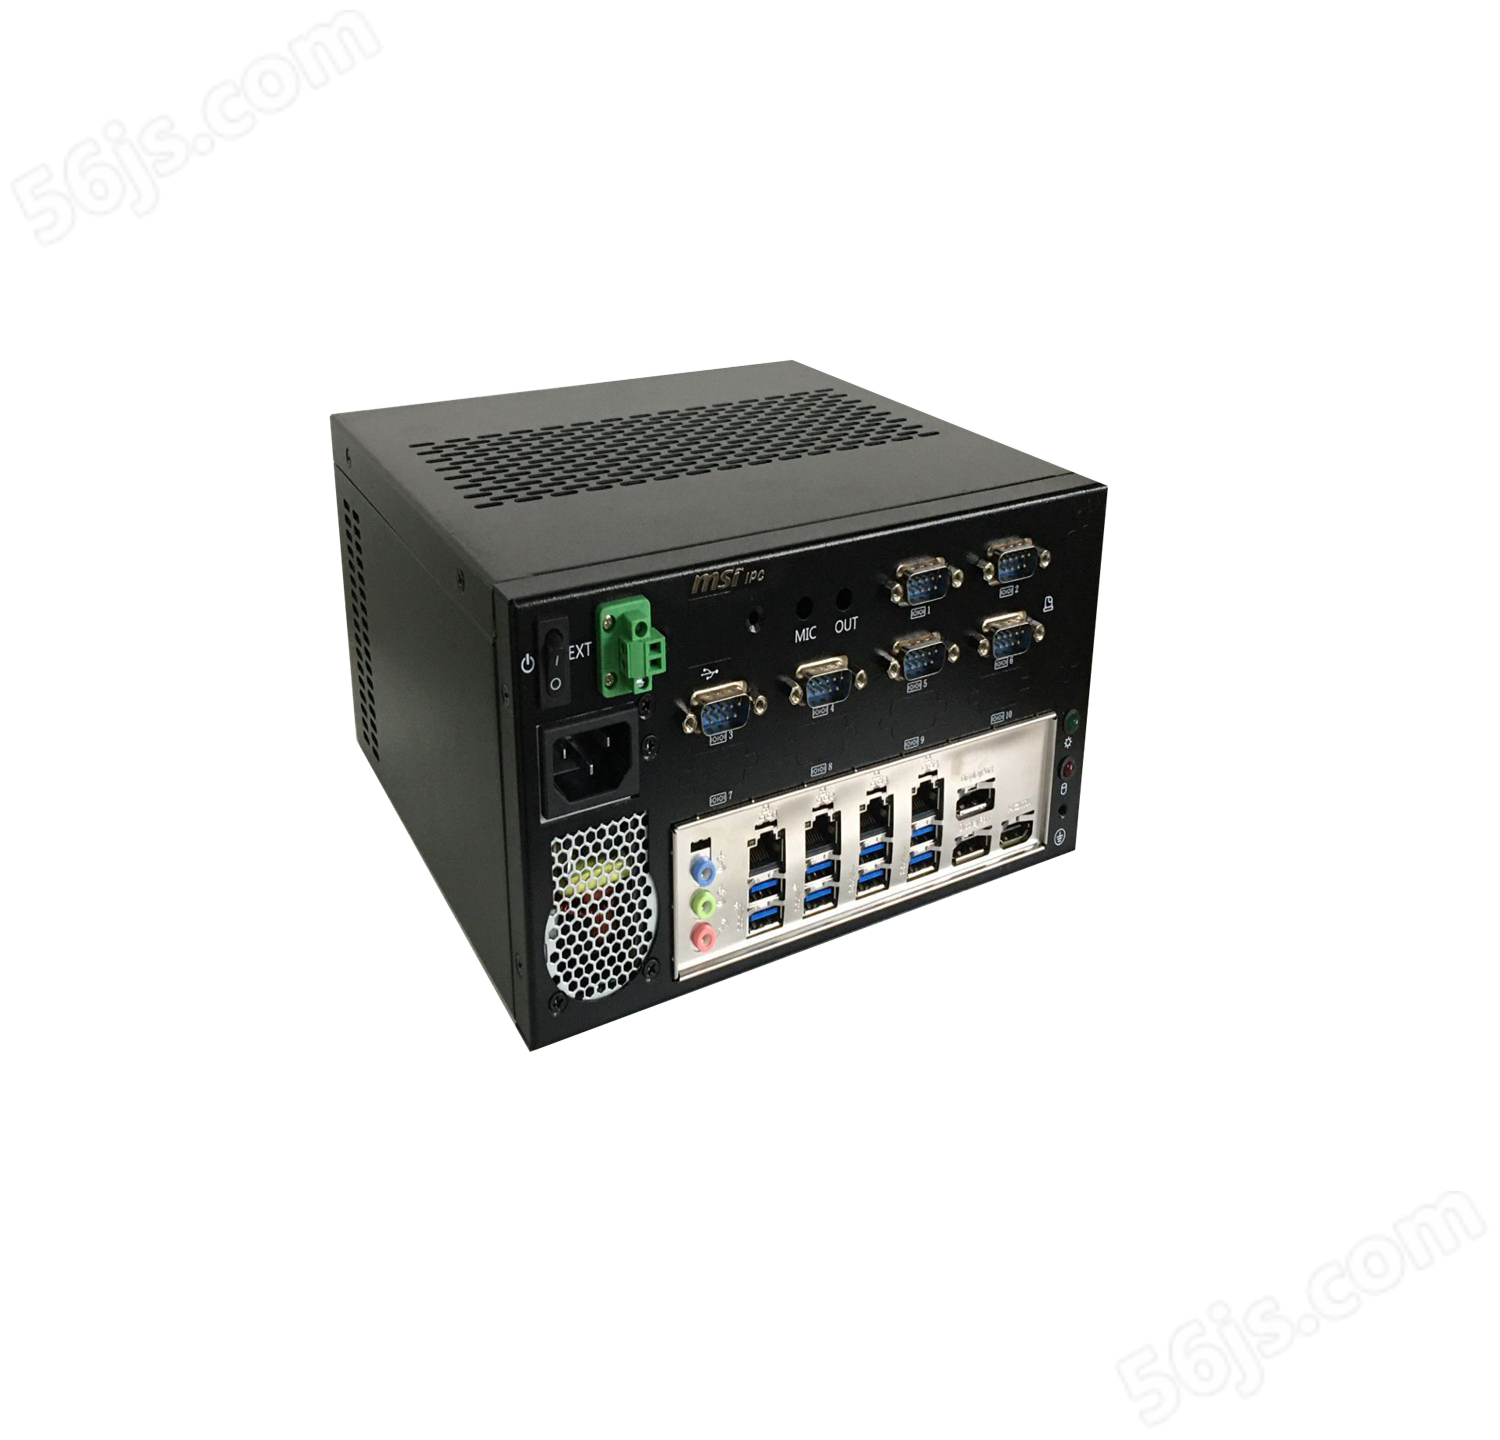 IPC-605-98L1壁挂式单面IO工控机